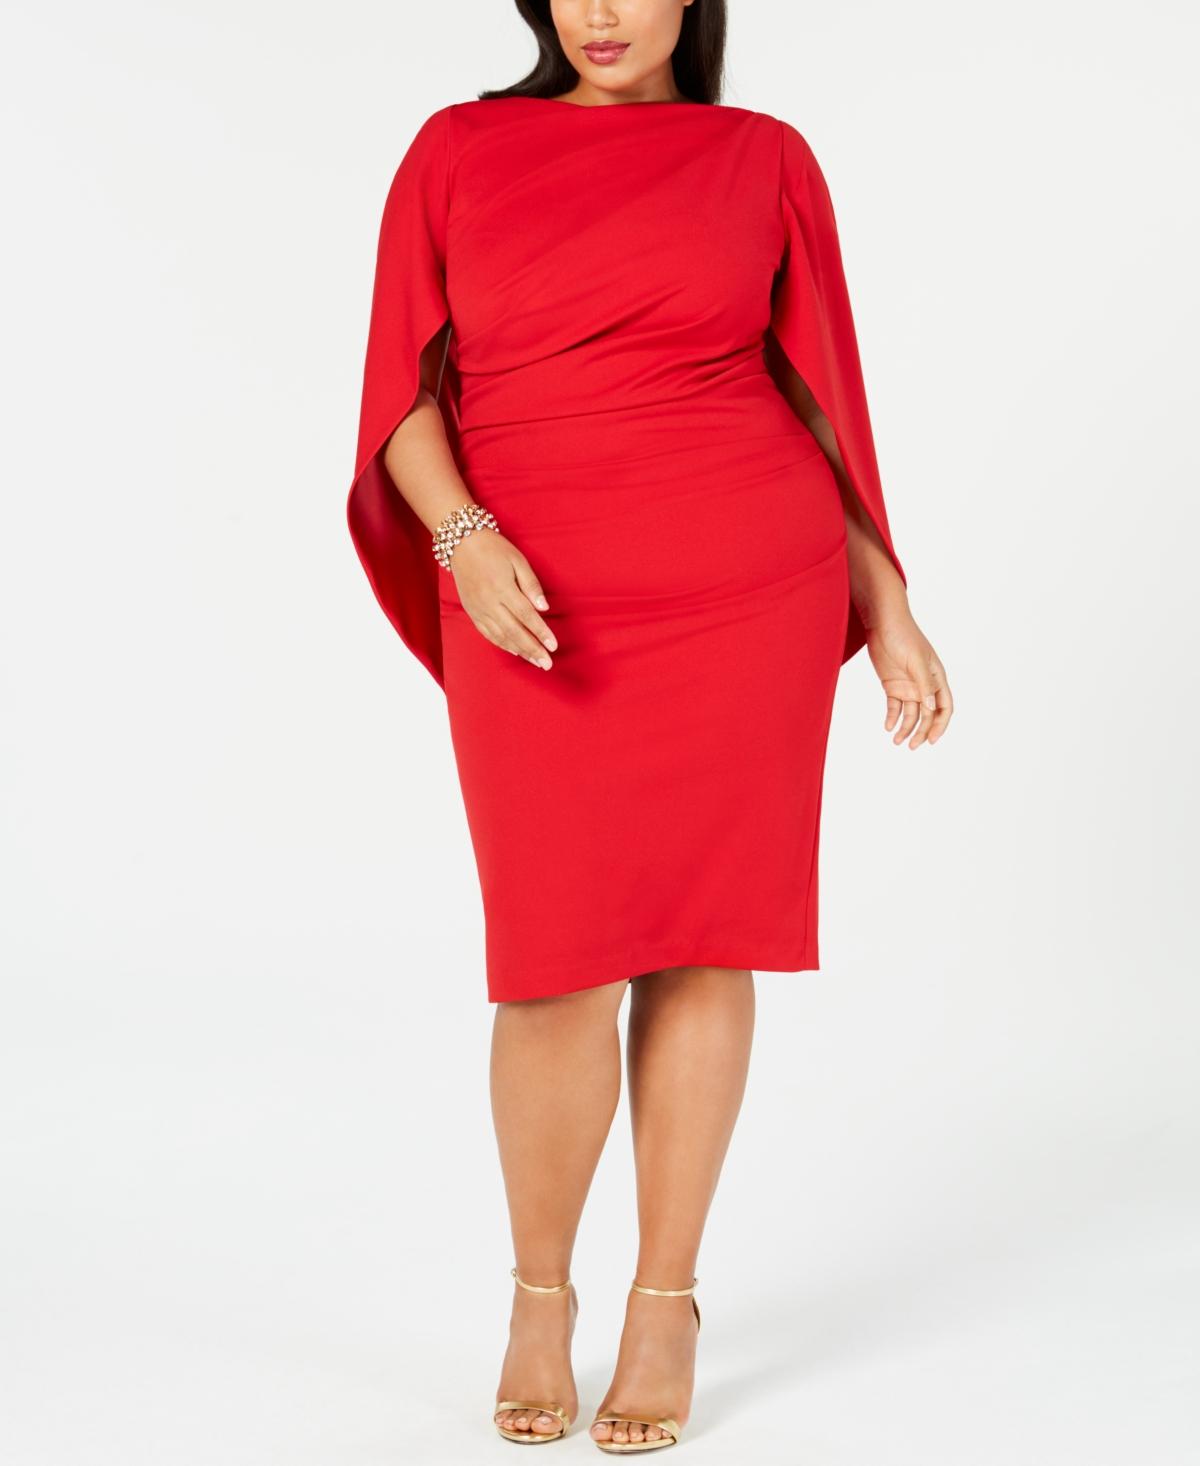 B & Adam Plus Size Ruched Cape Dress in Red